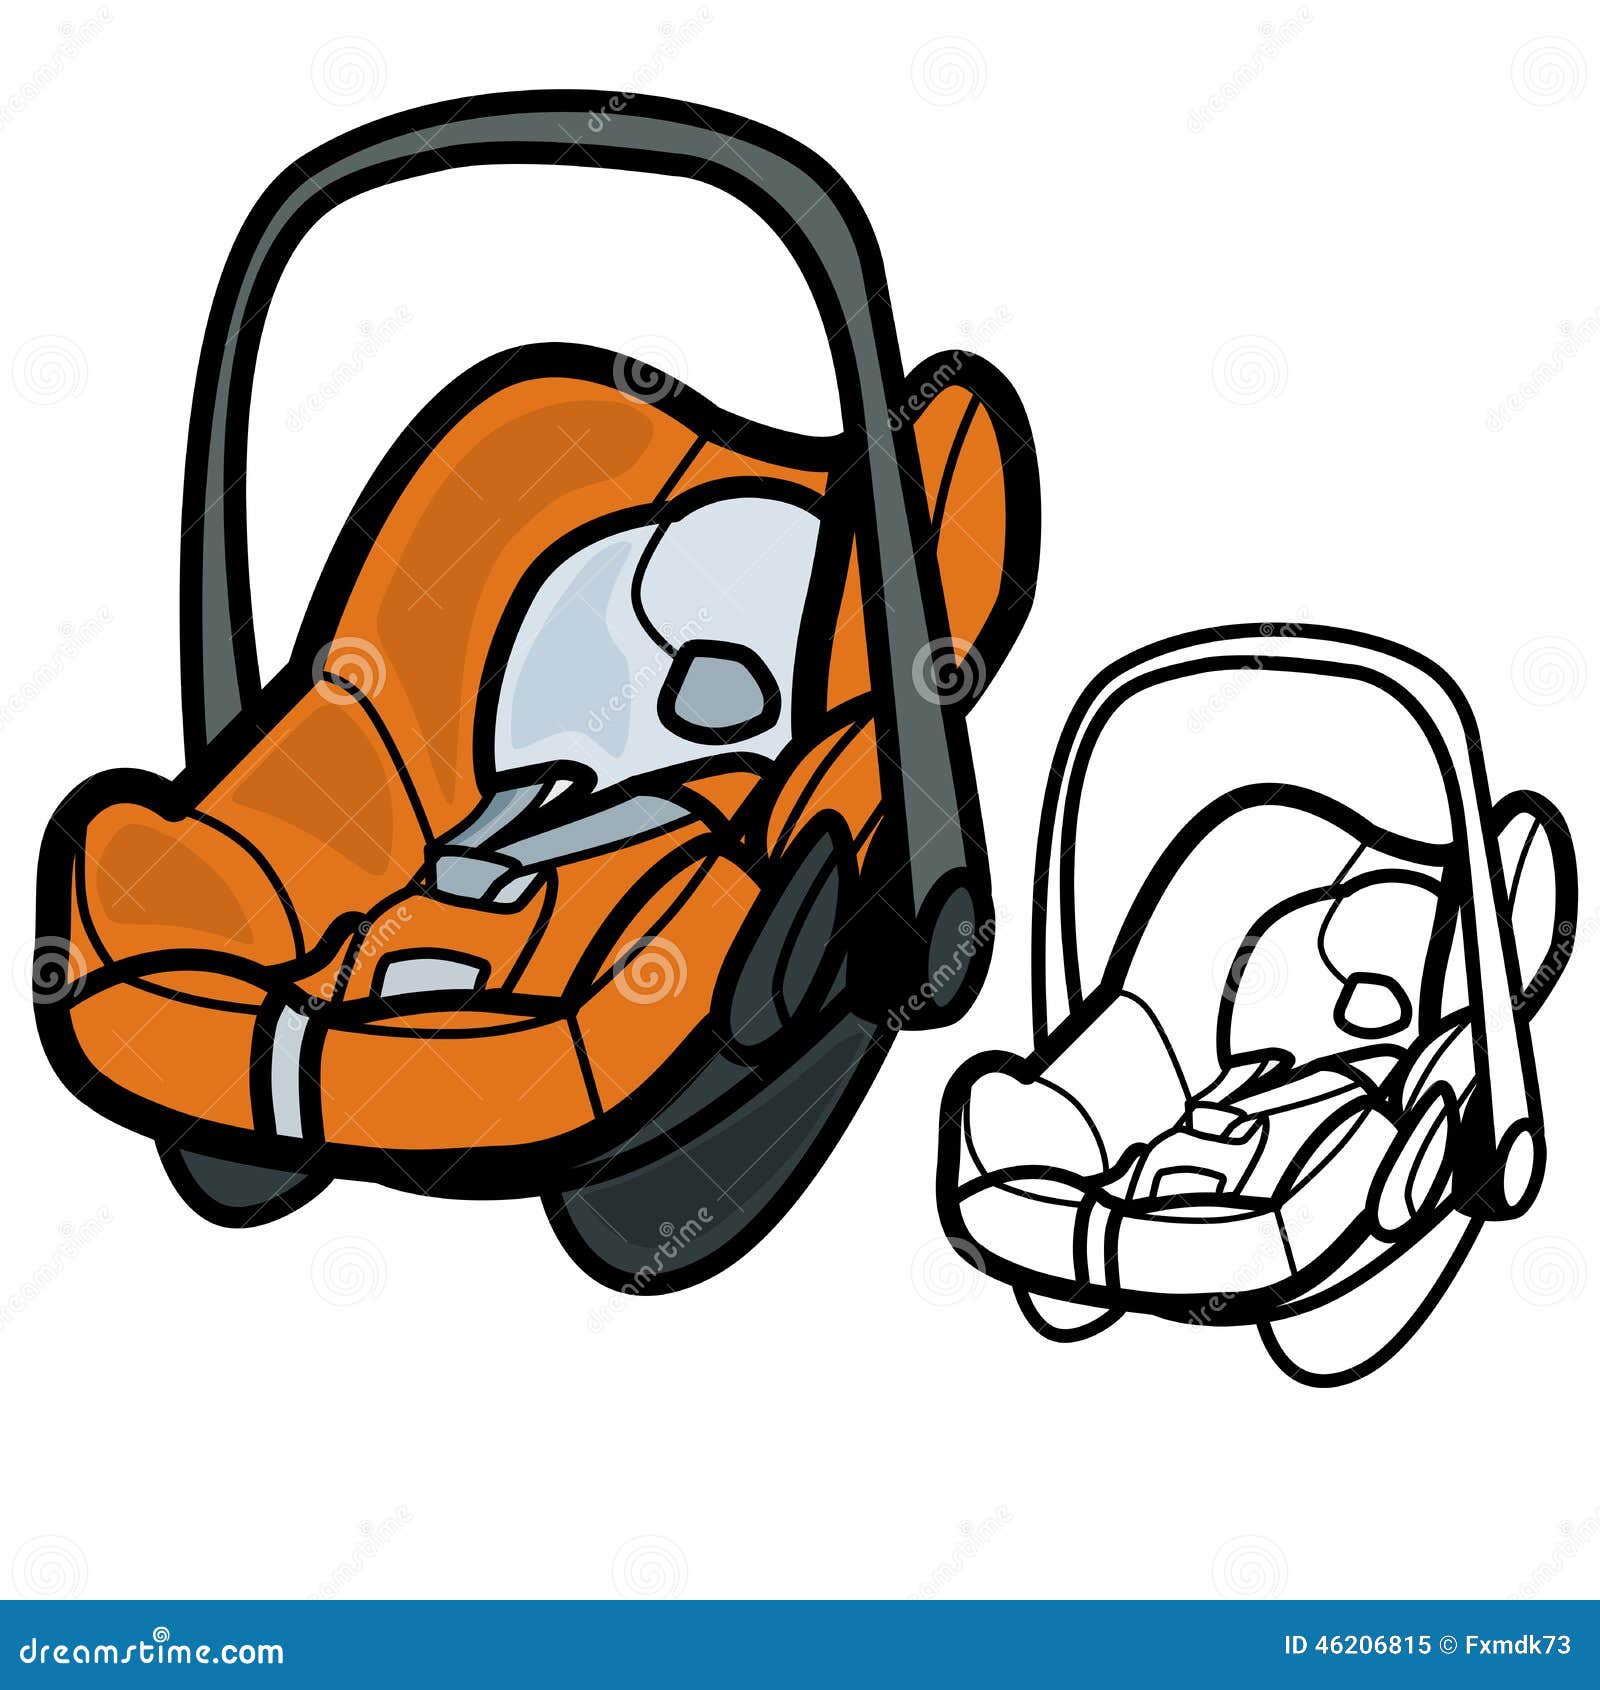 car seat clipart - photo #27